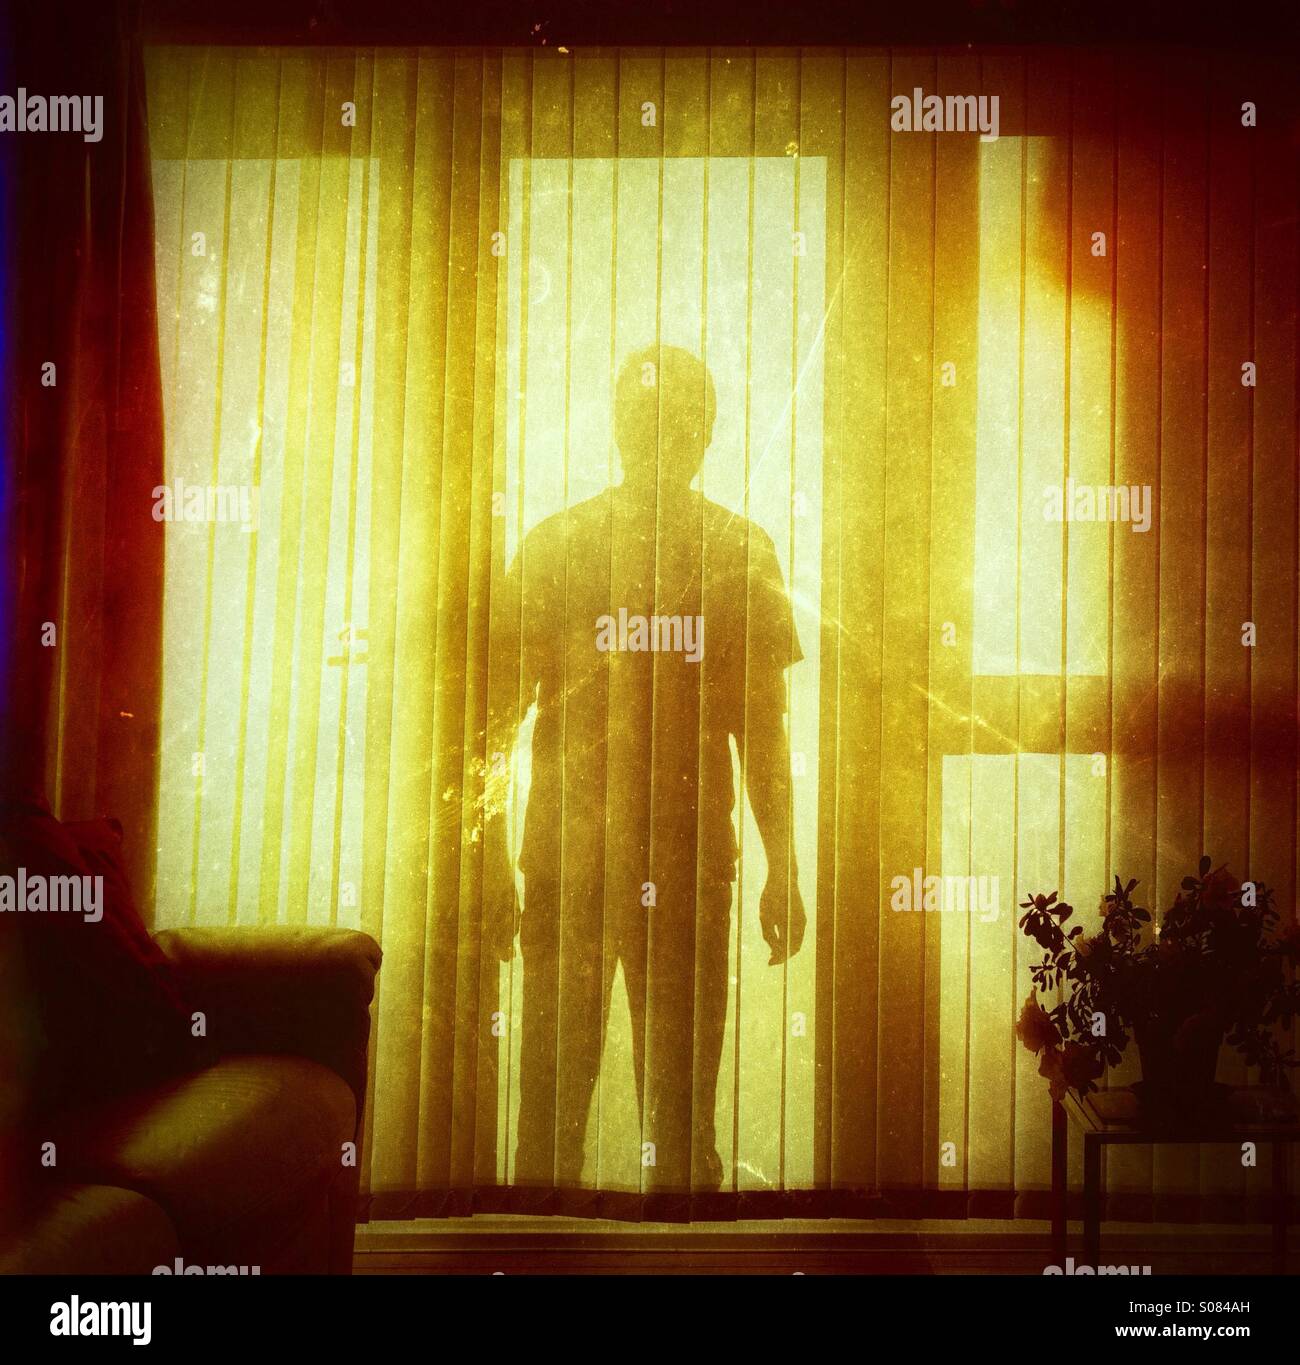 Shadowy threatening figure at a domestic home window - burglar stalker silhouette Stock Photo